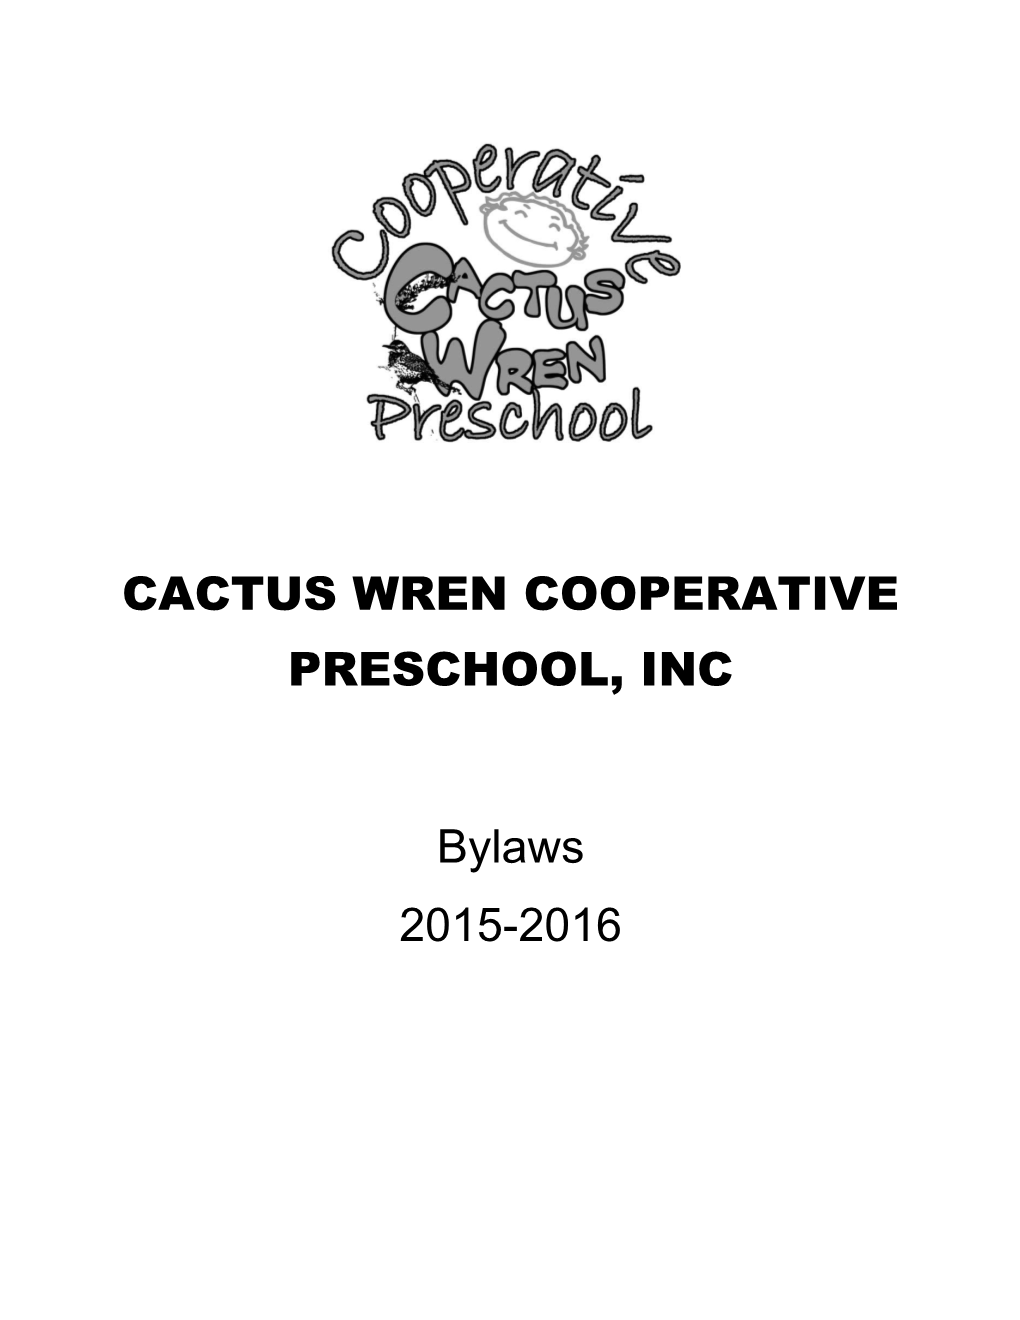 Cactus Wren Cooperative Preschool, Inc